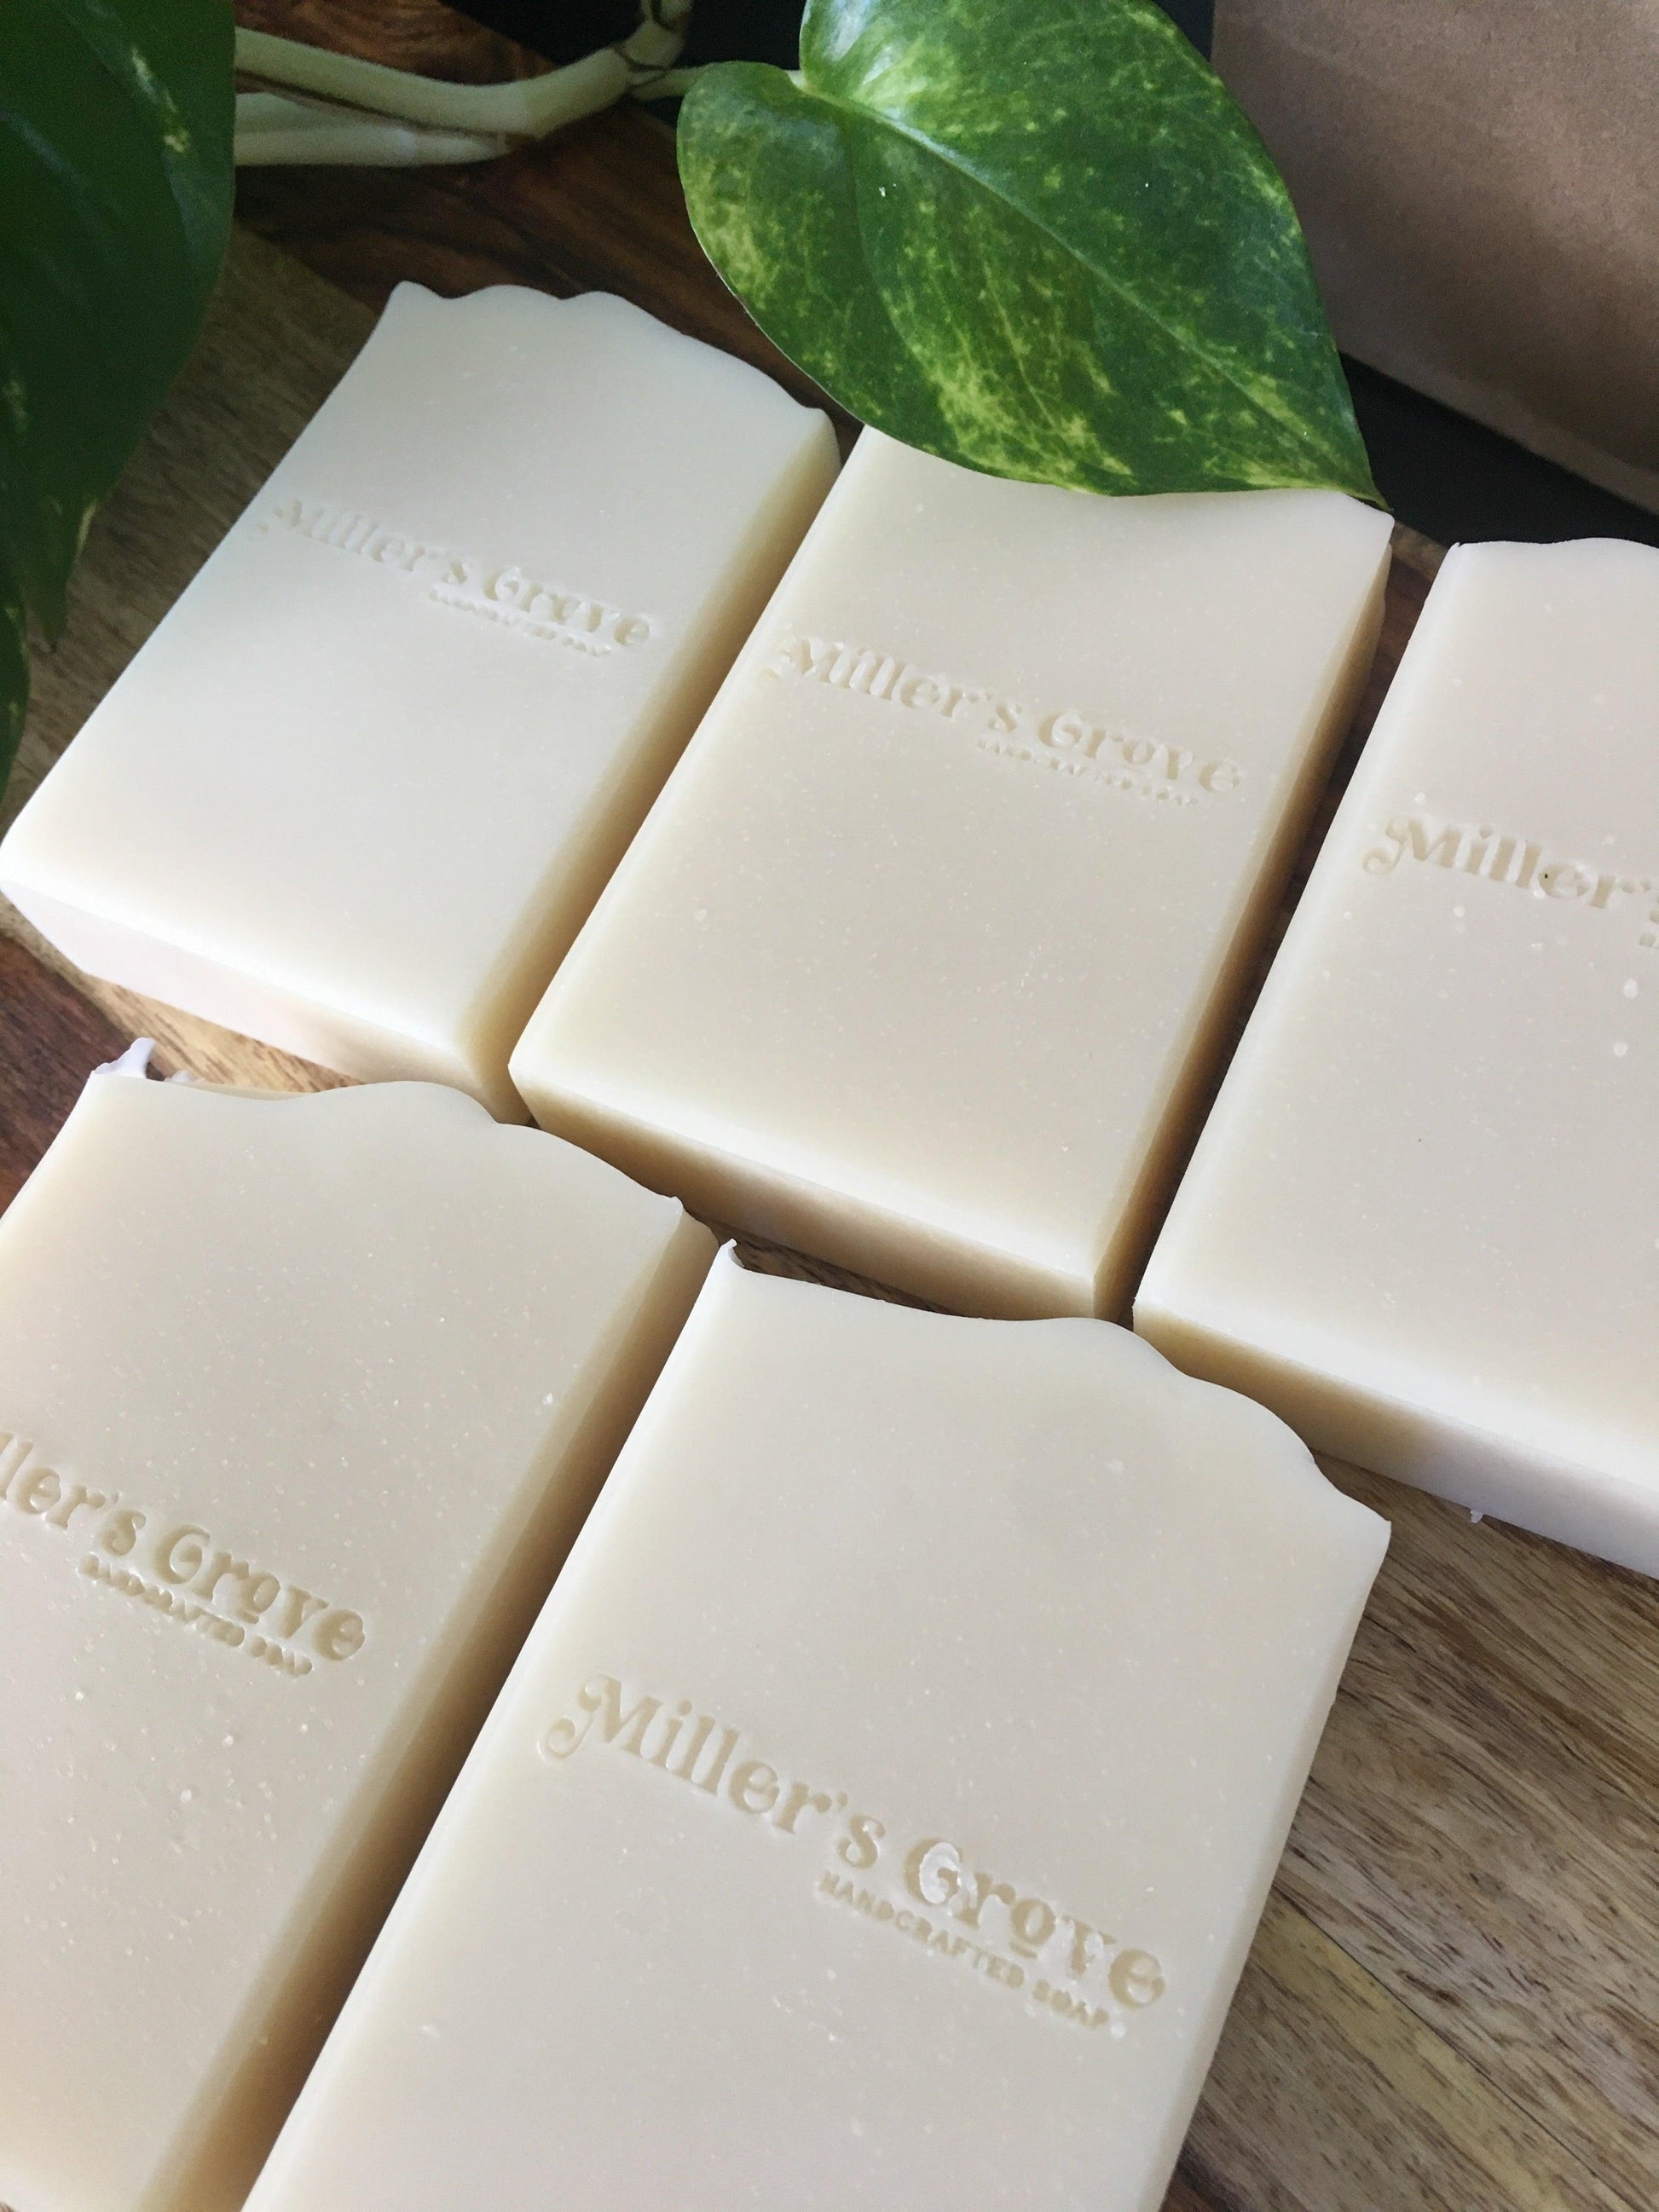 Keep It Simple Bar Soap - Miller's Grove